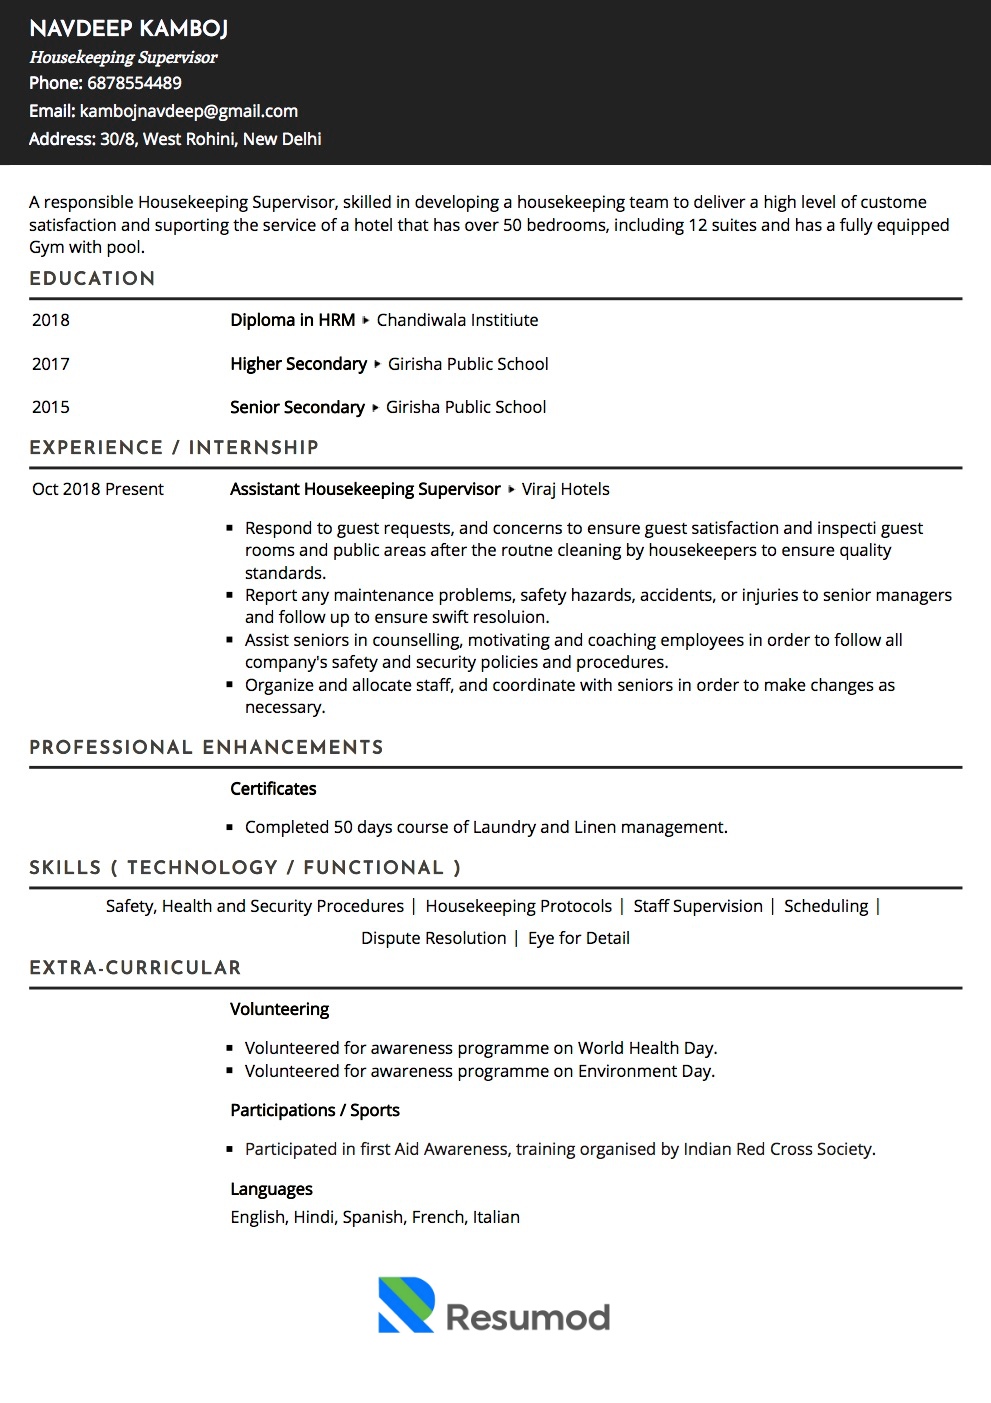 Resume of Housekeeping Supervisor 